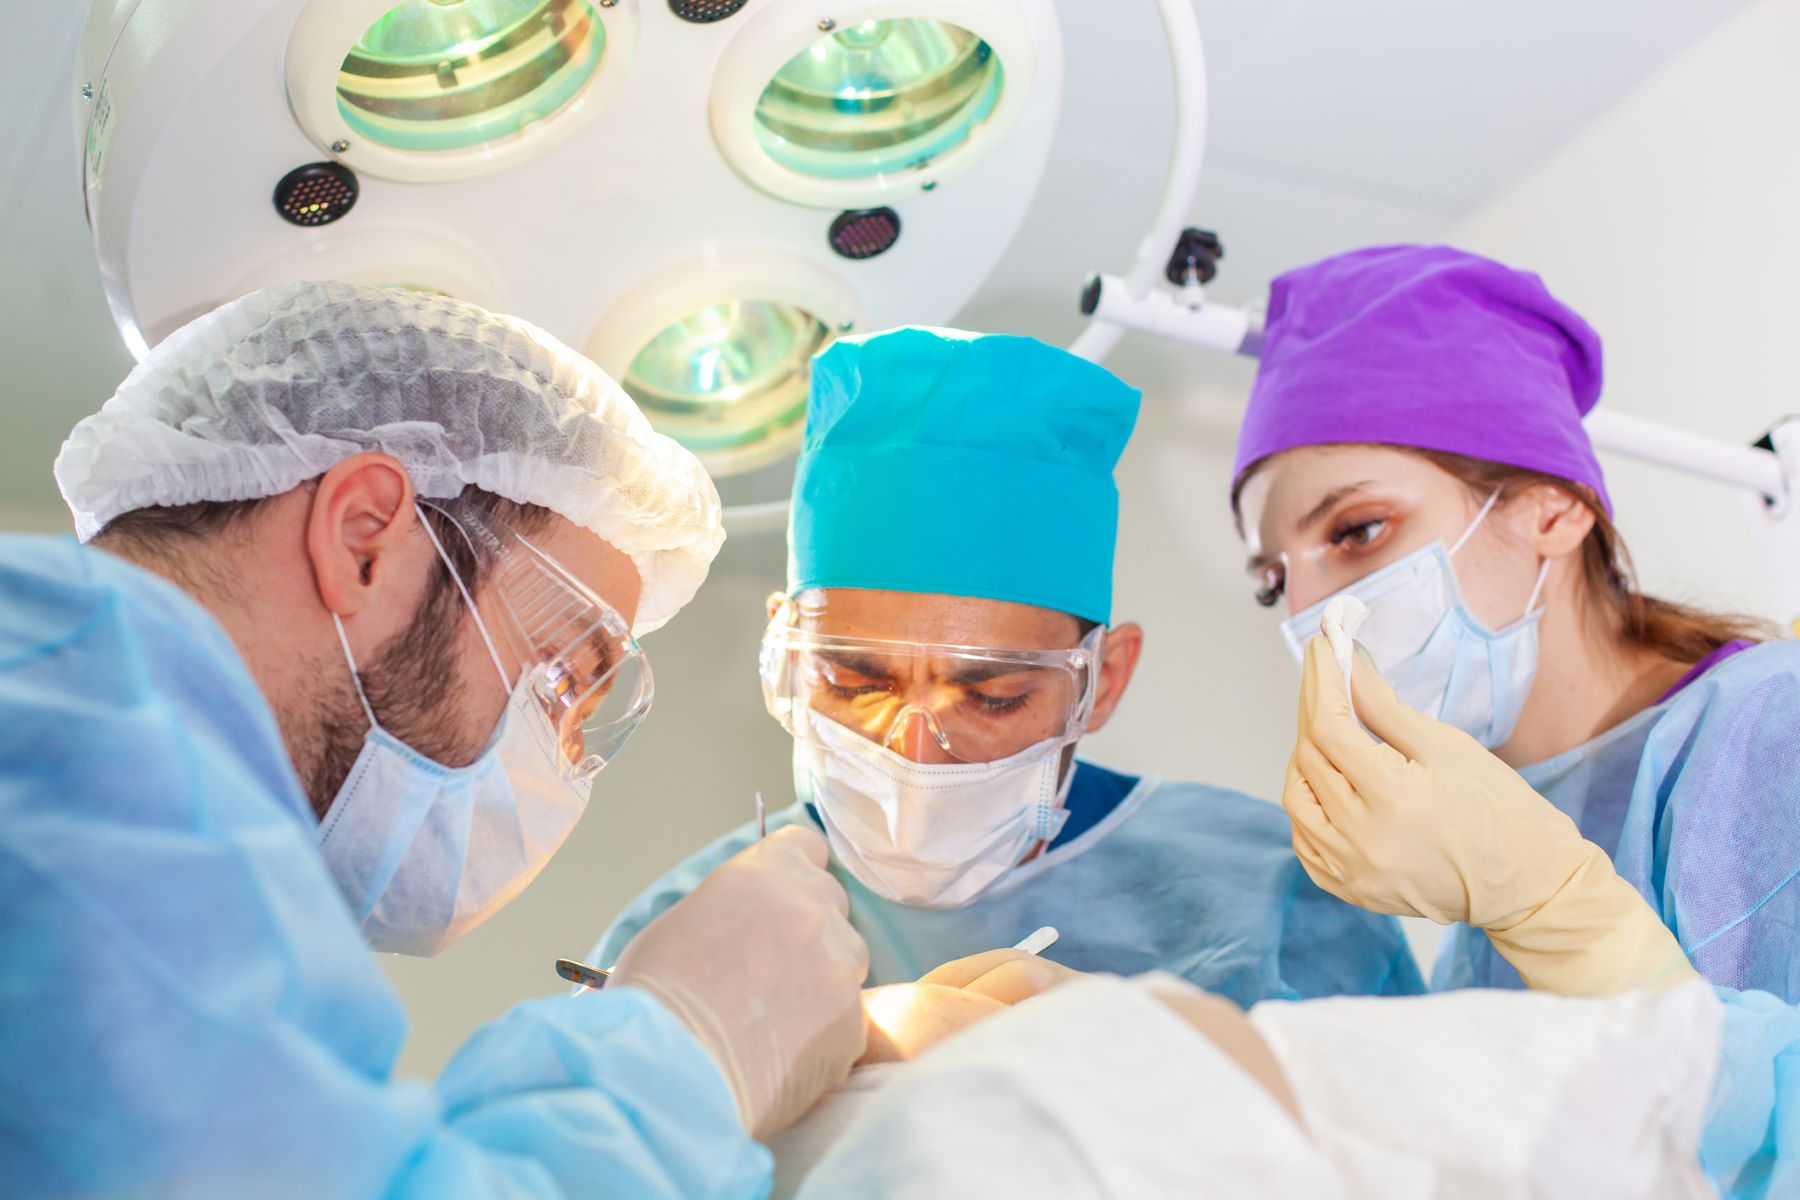 Hair transplant surgeons in operating room